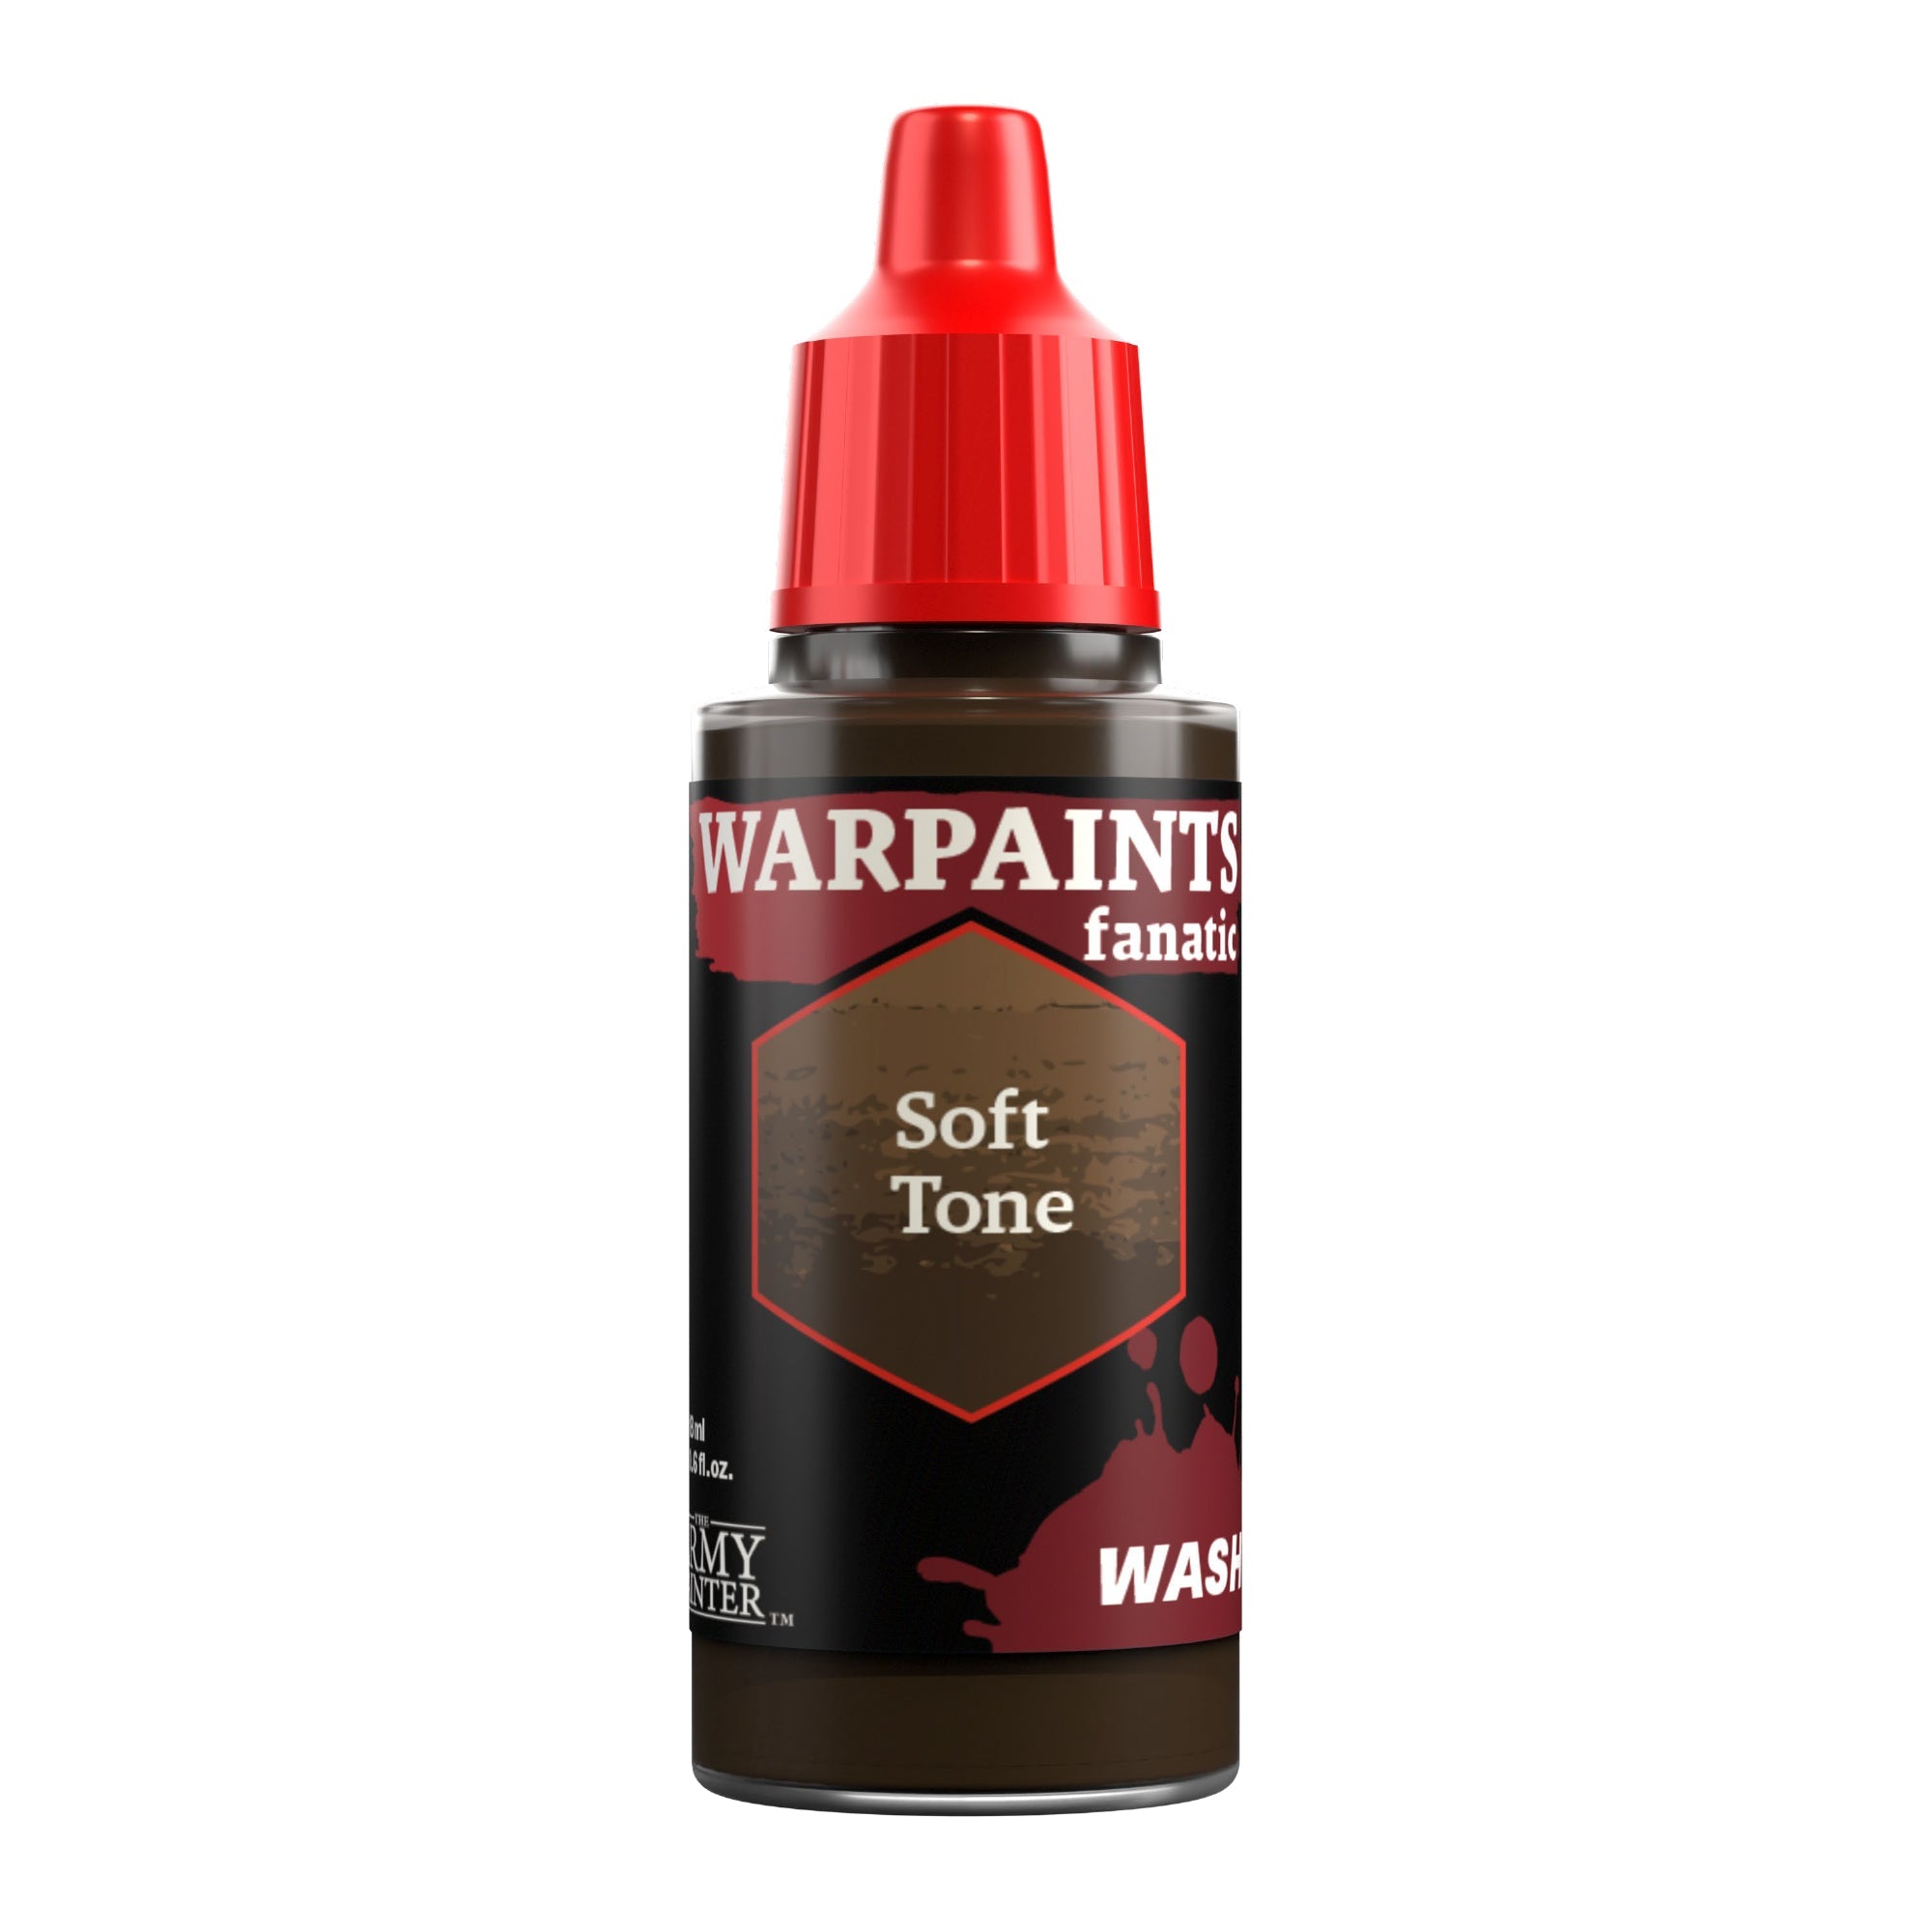 Warpaints Fanatic: Wash - Soft Tone 18ml | CCGPrime